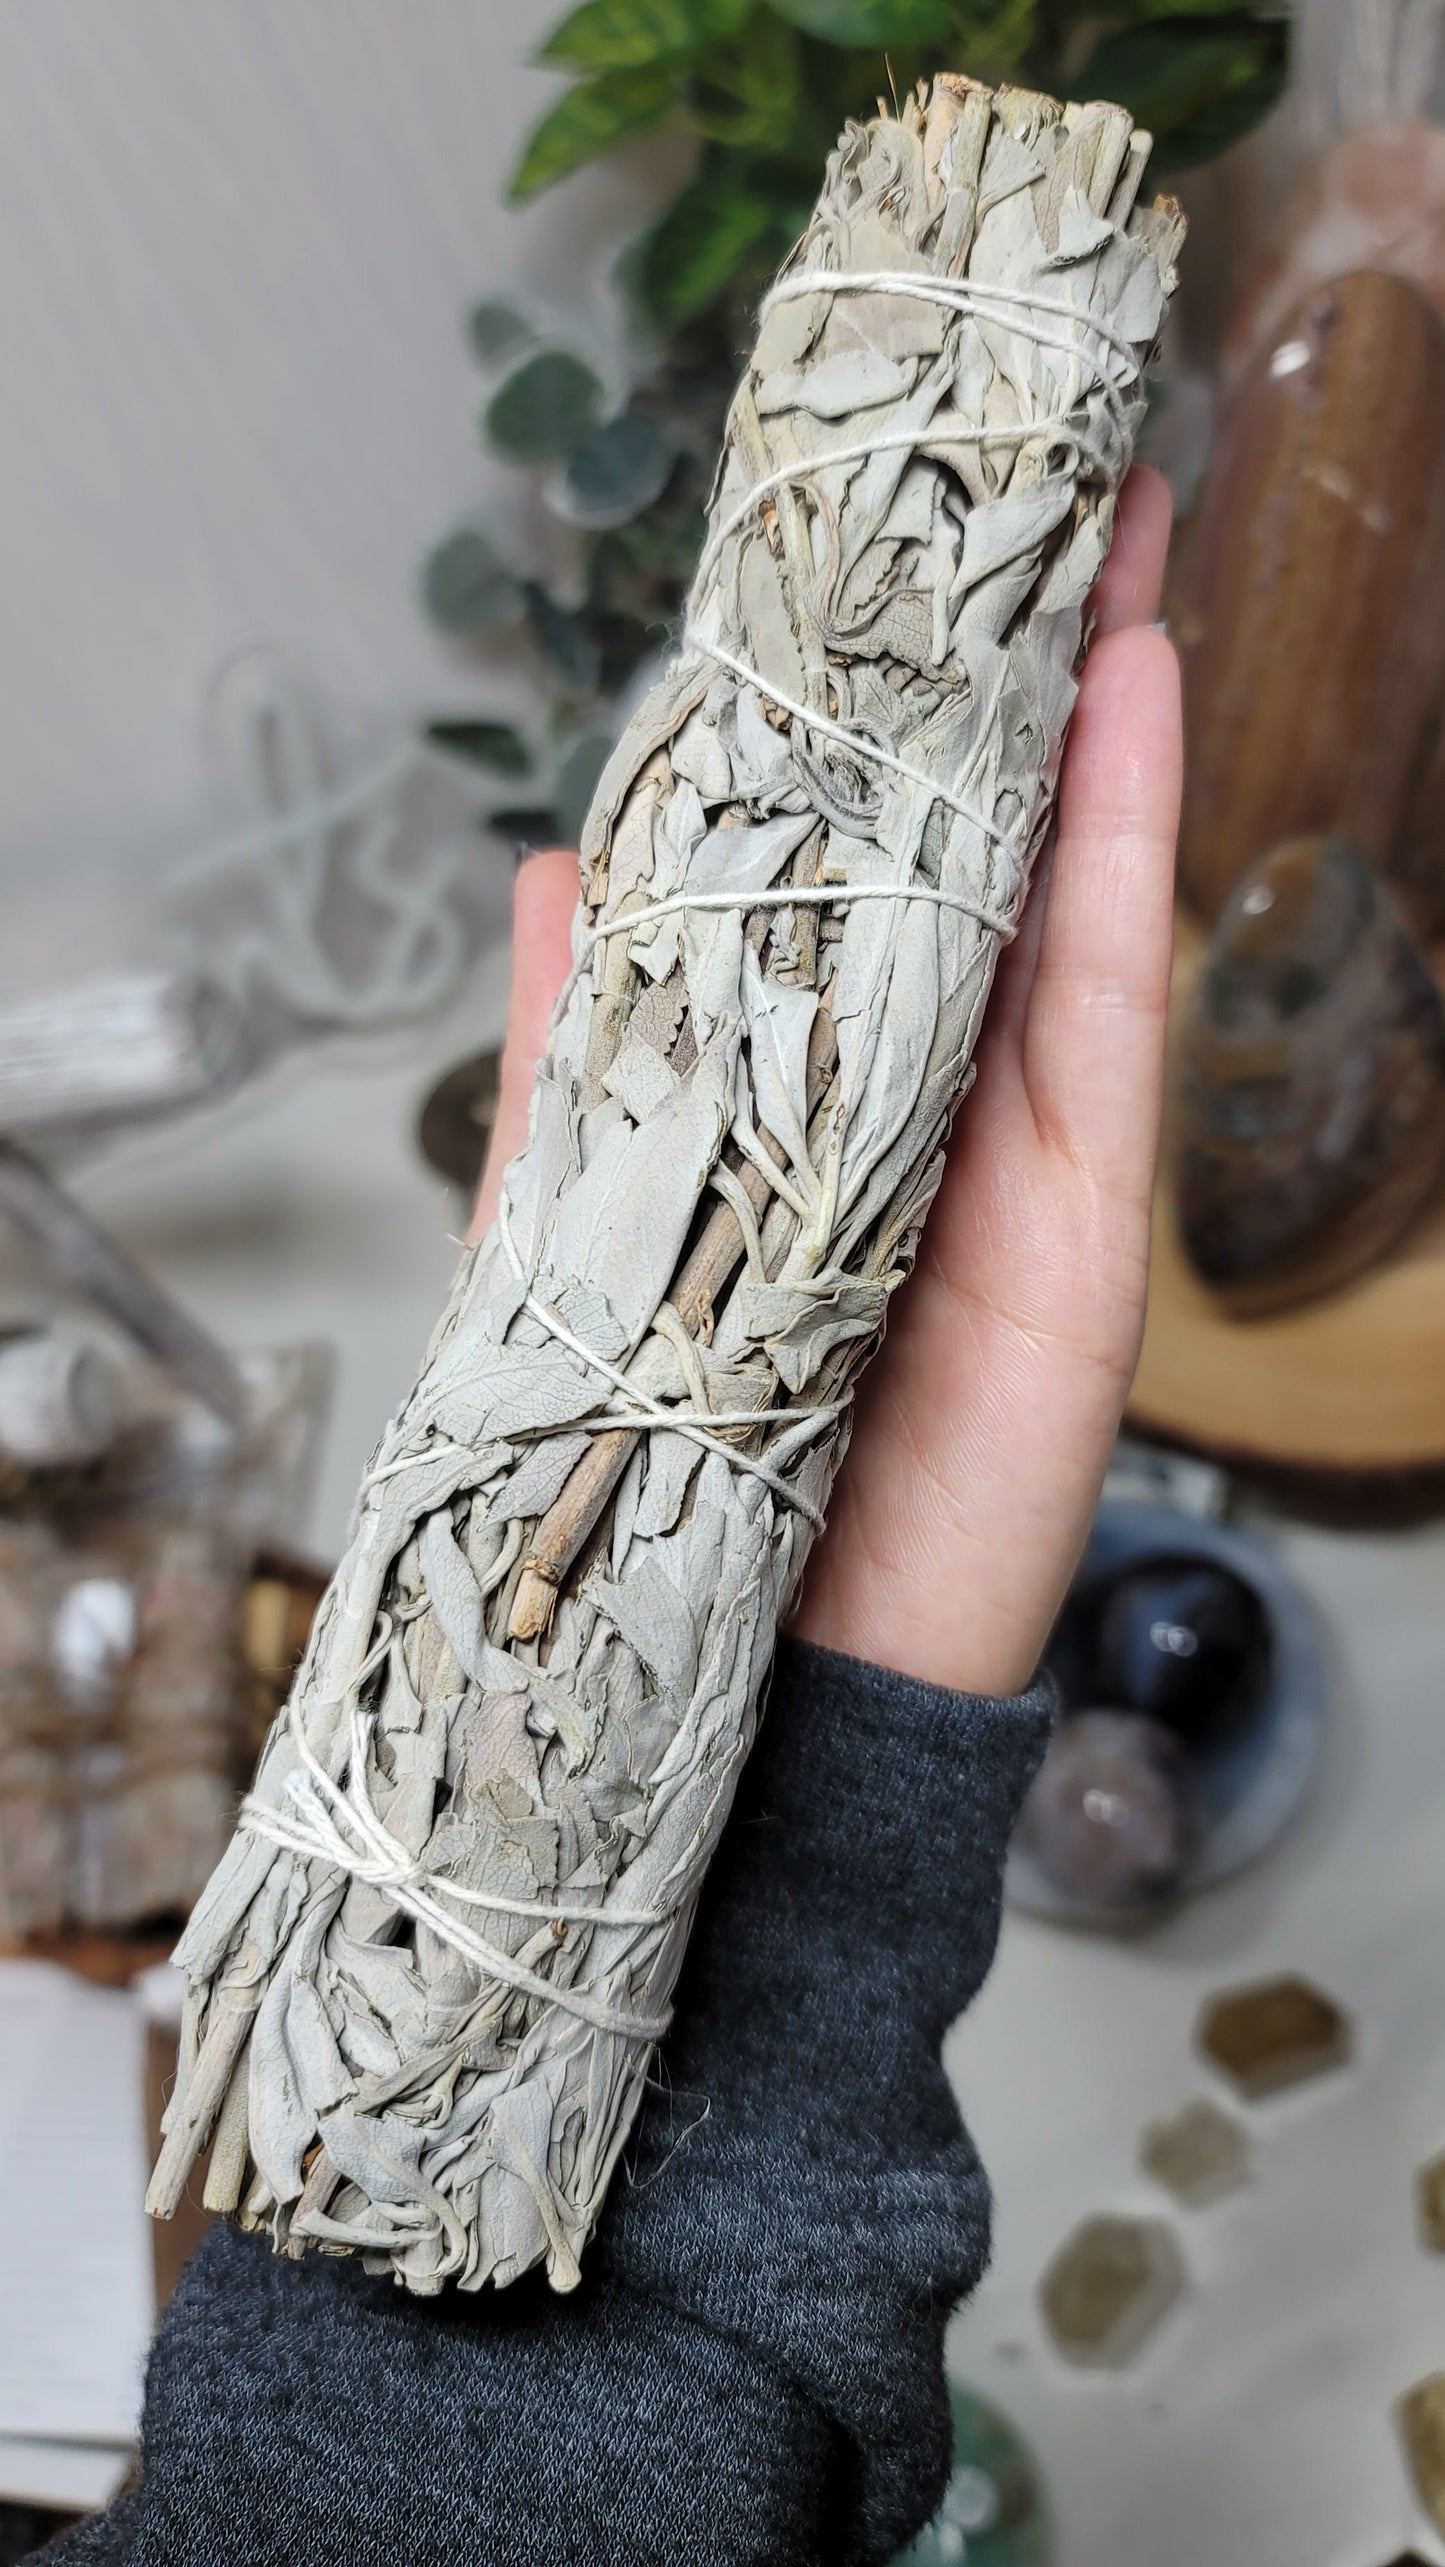 9" California White Sage Smudge Stick, Cleansing Ritual/Tool